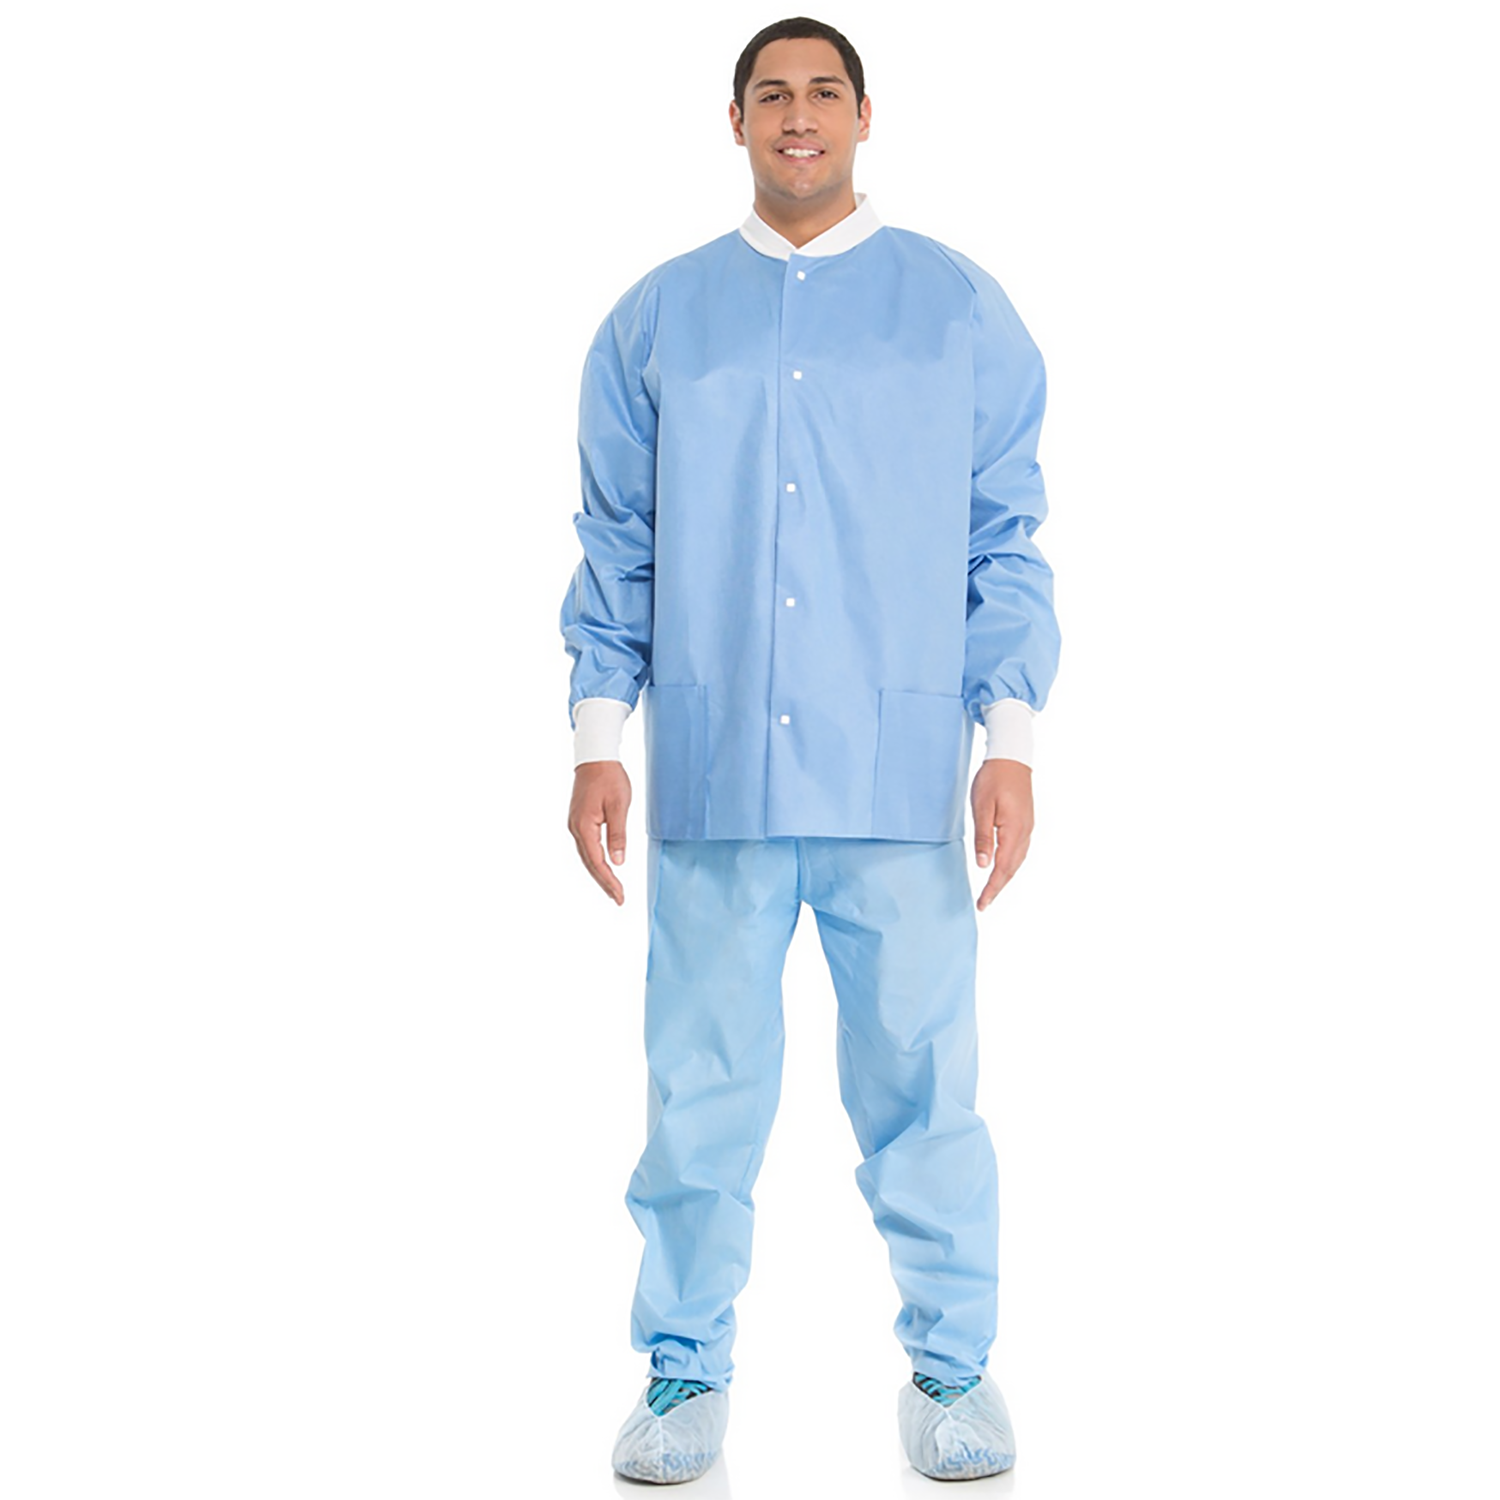 Halyard Professional Jacket | Blue | Large | Pack of 24